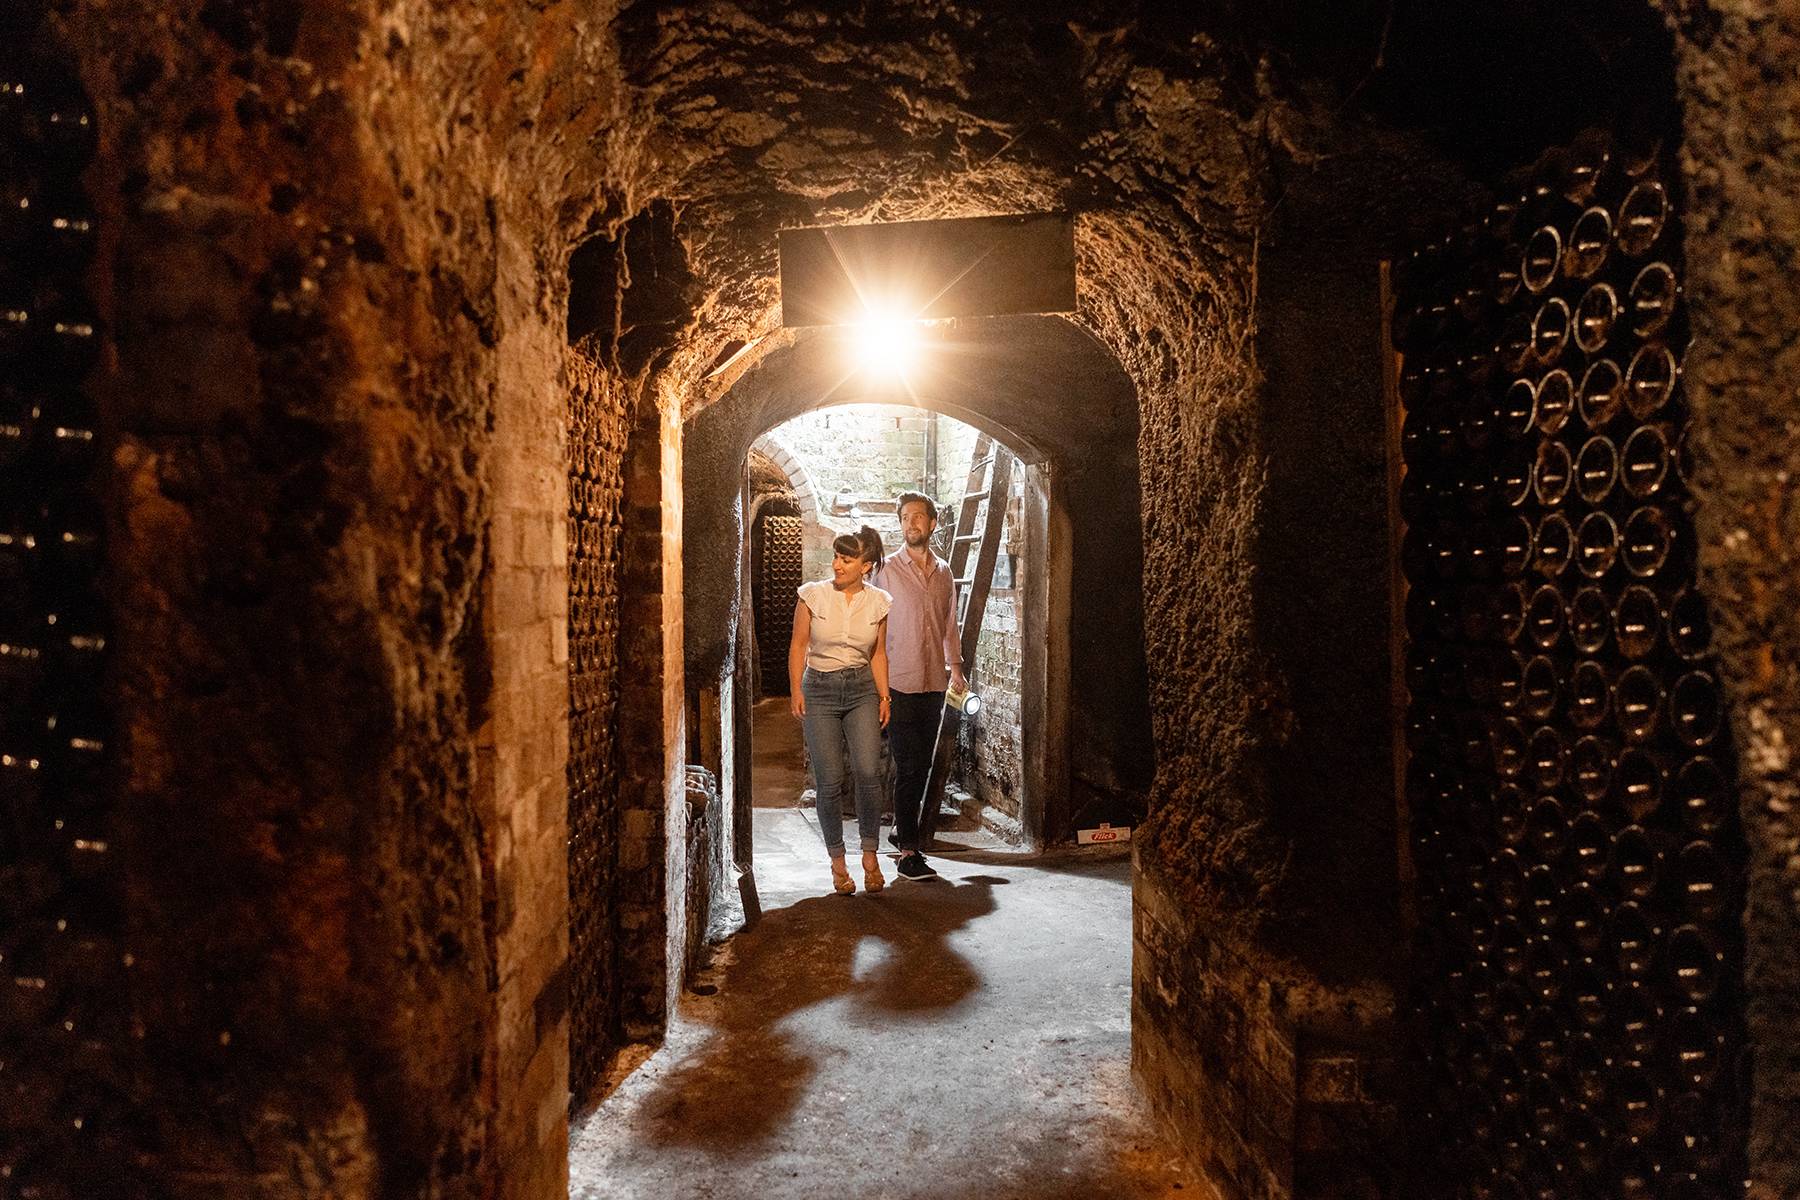 seppelt winery underground tour